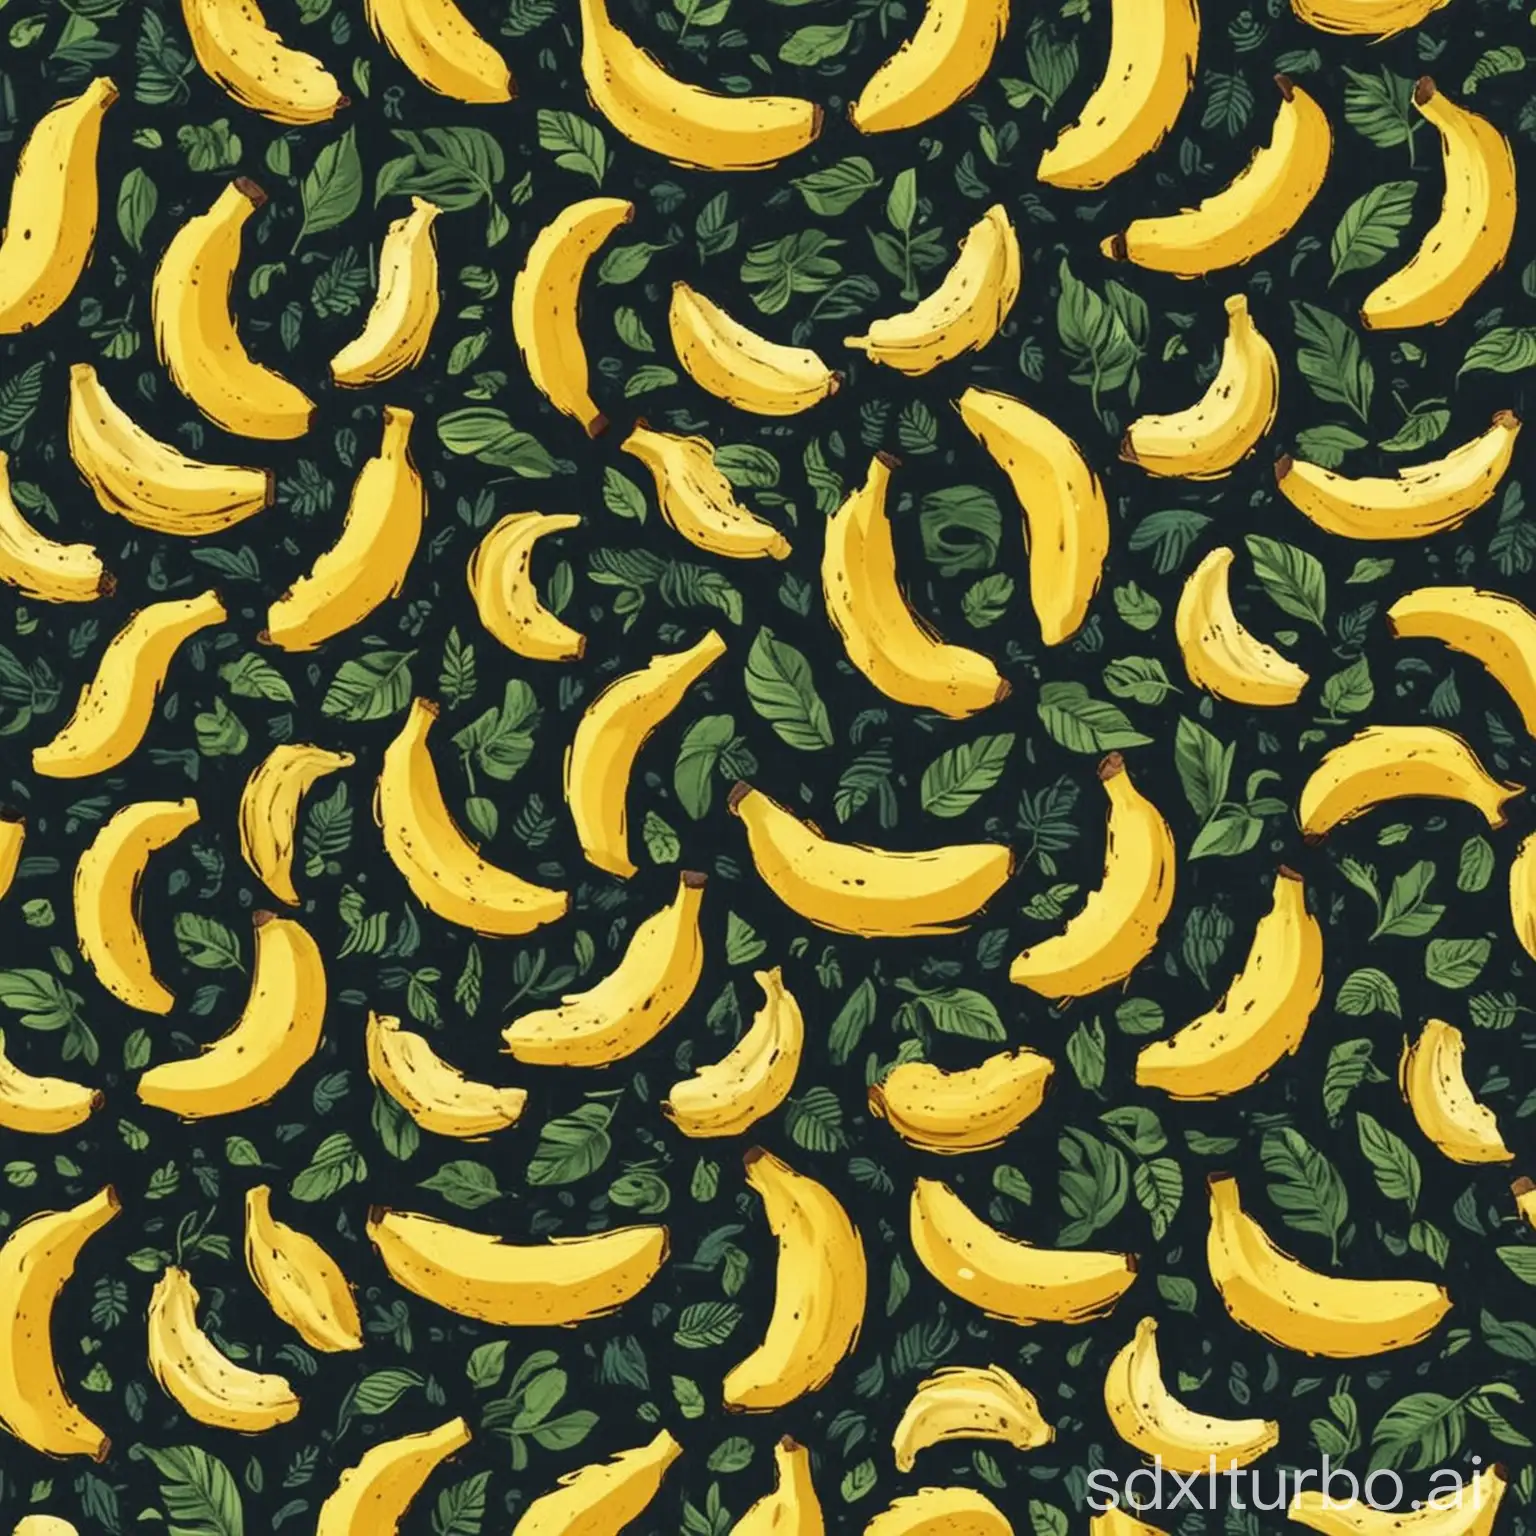 Flat pattern wallpaper, pattern is a banana